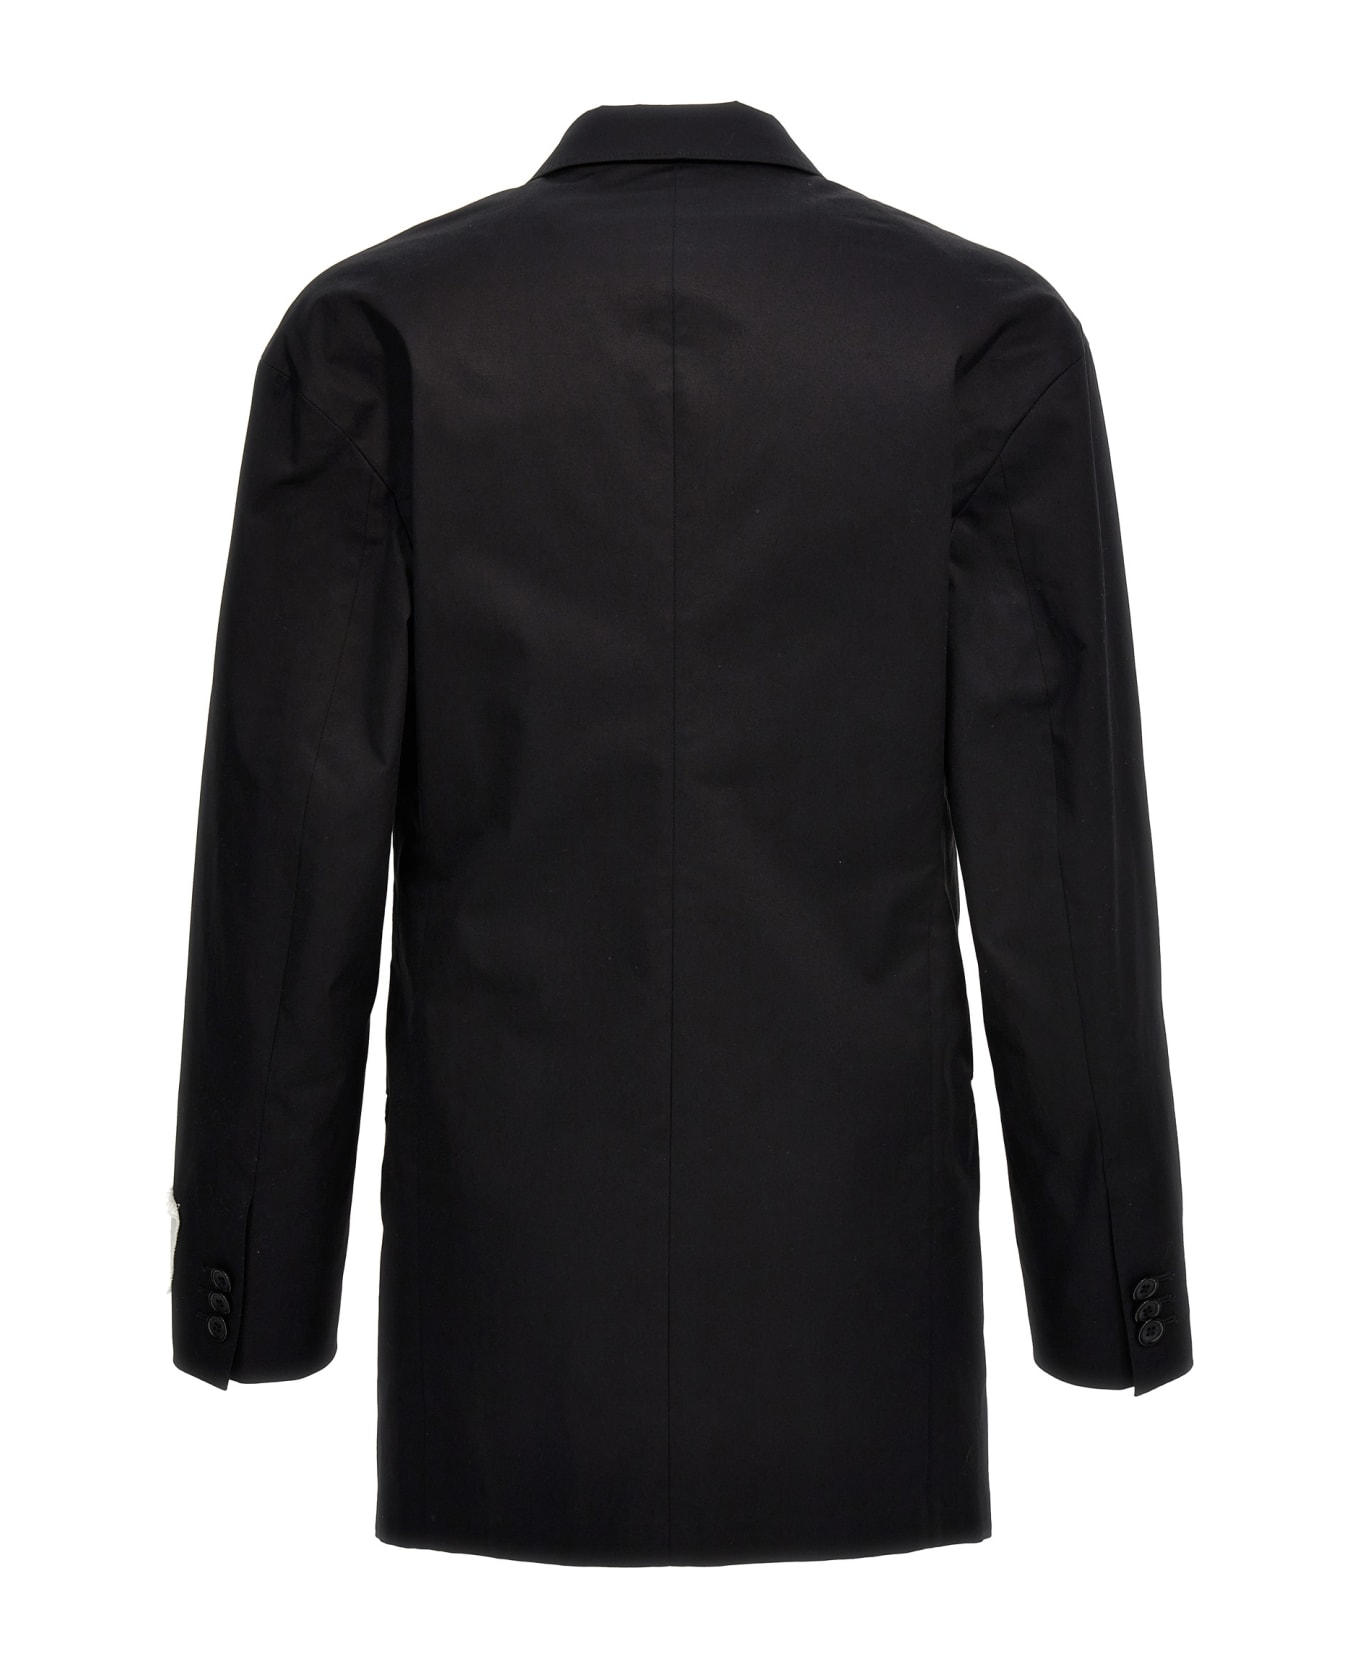 Dolce & Gabbana 're-edition S/s 1992' Blazer Jacket - Black   コート